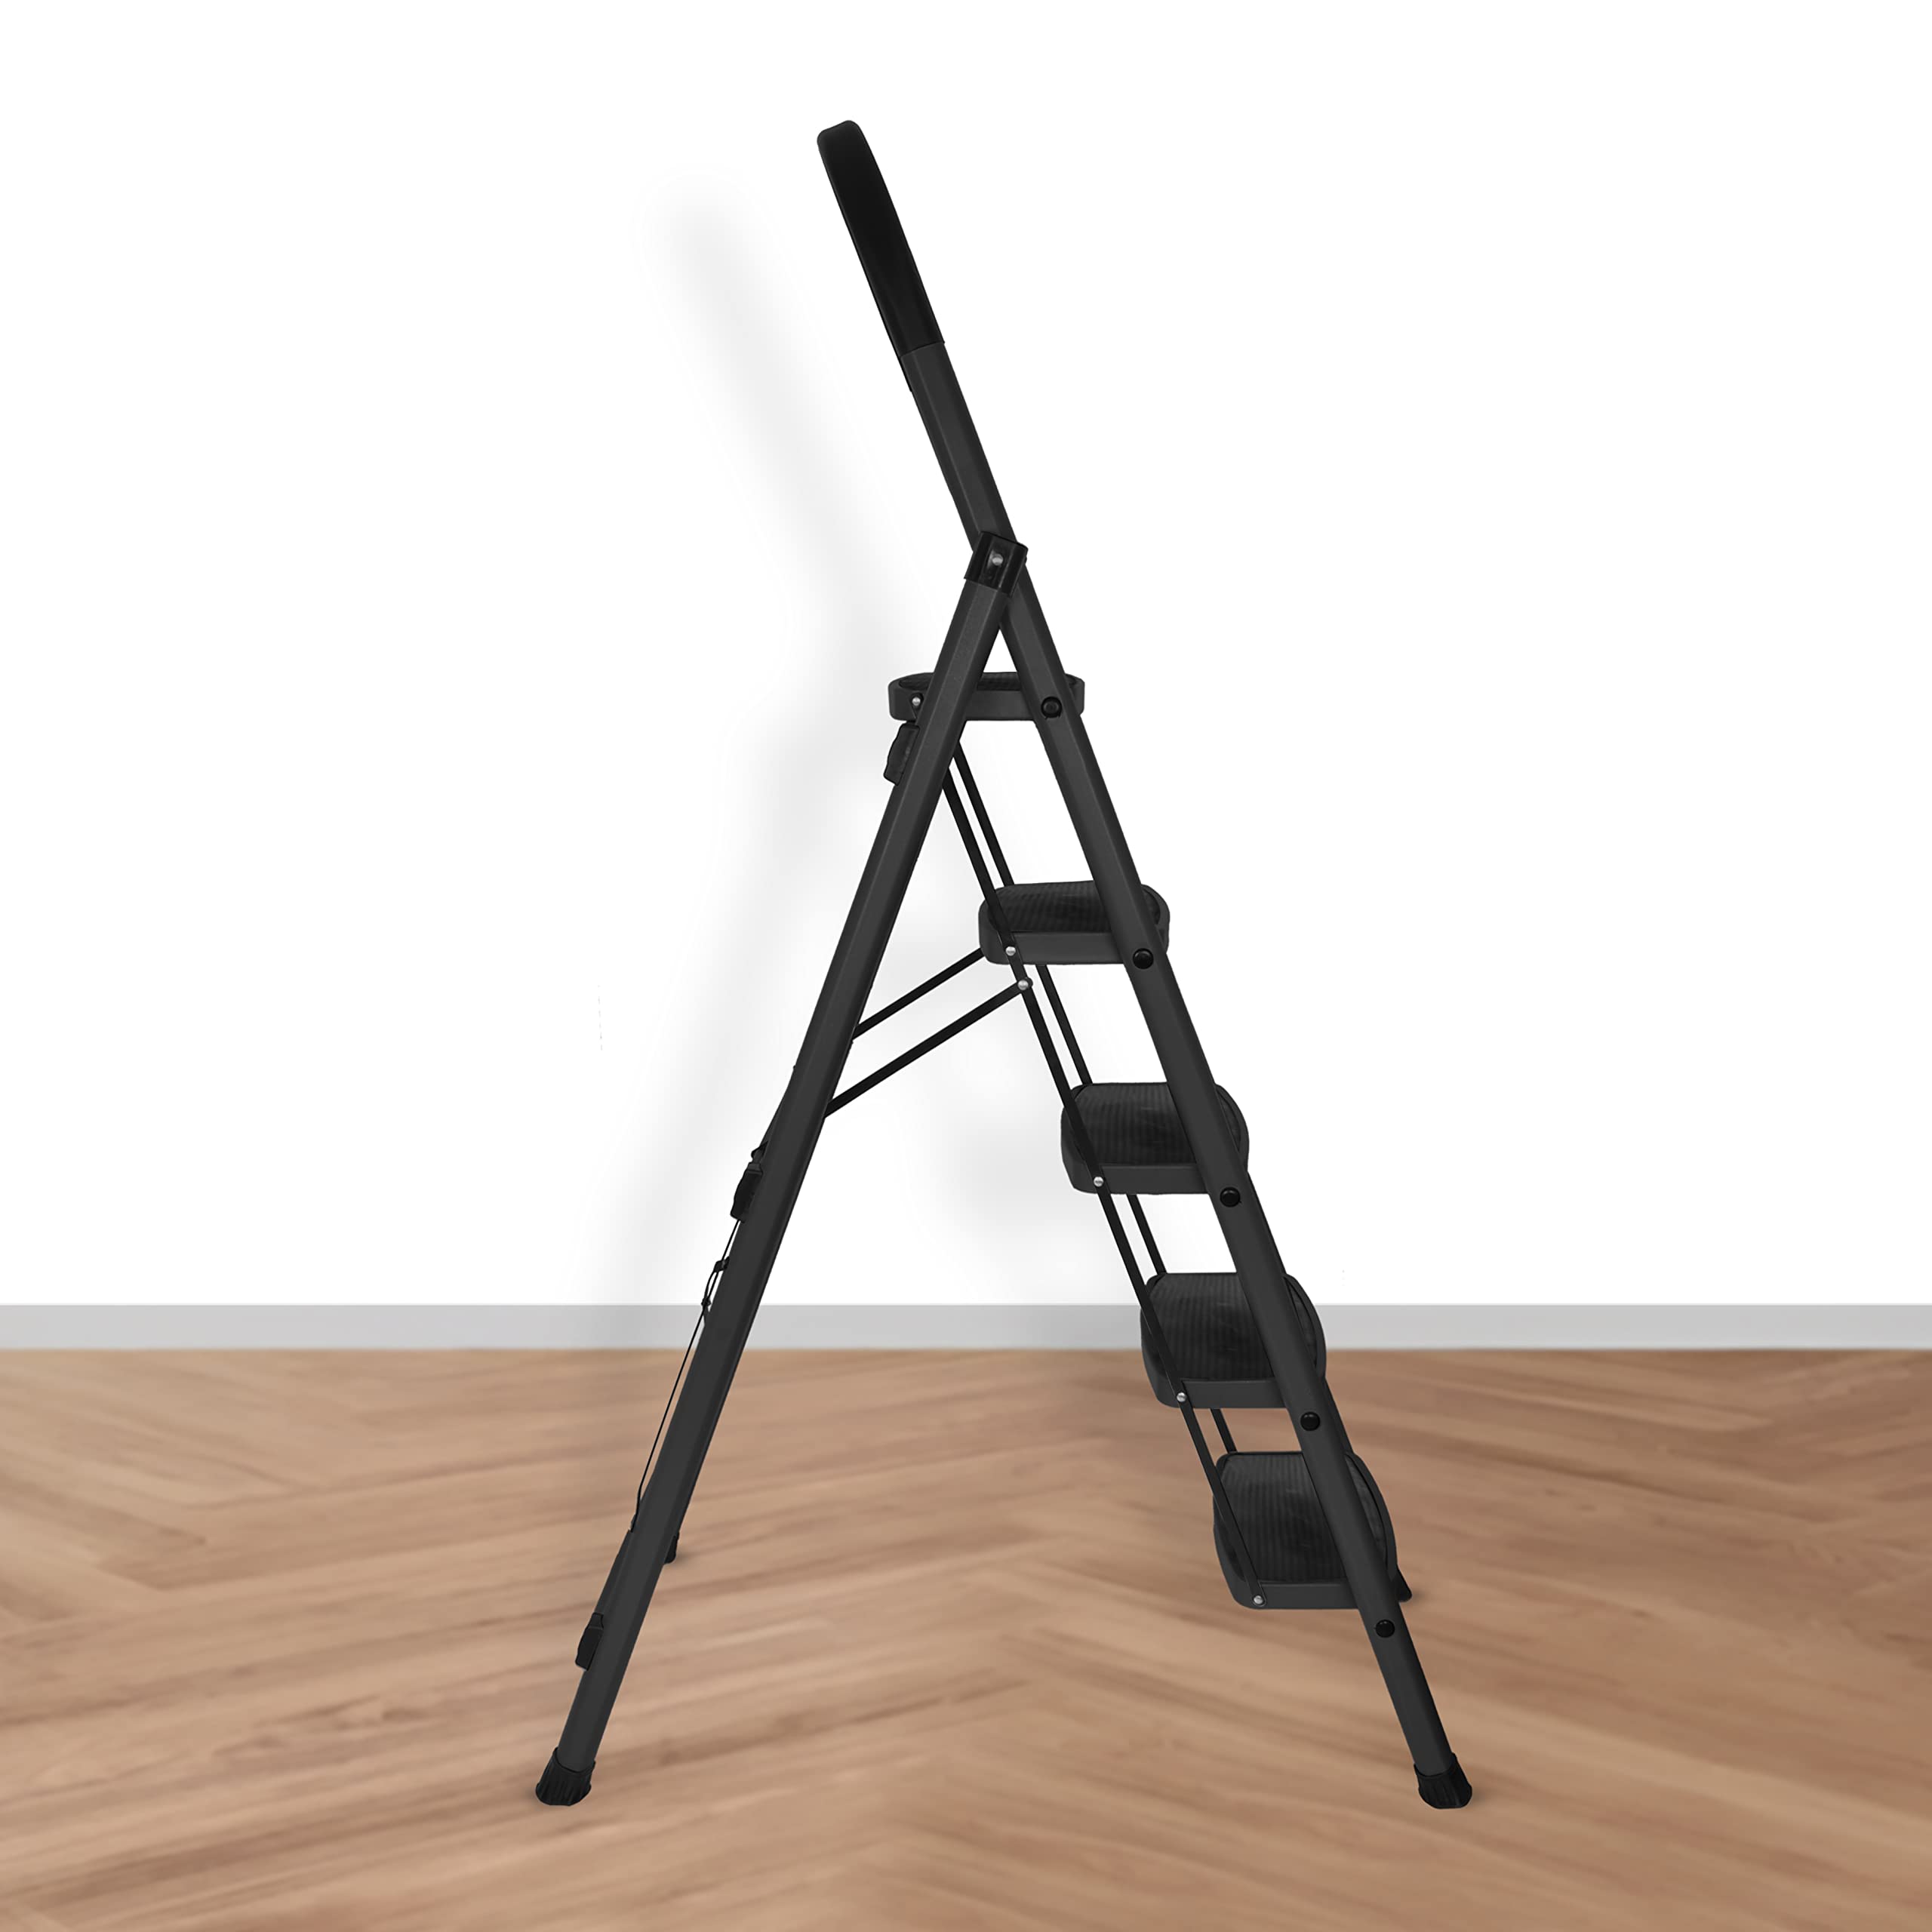 Primax Steel Foldable 5-Step Ladder for Home - Wide Anti Skid Step Ladder (Black)